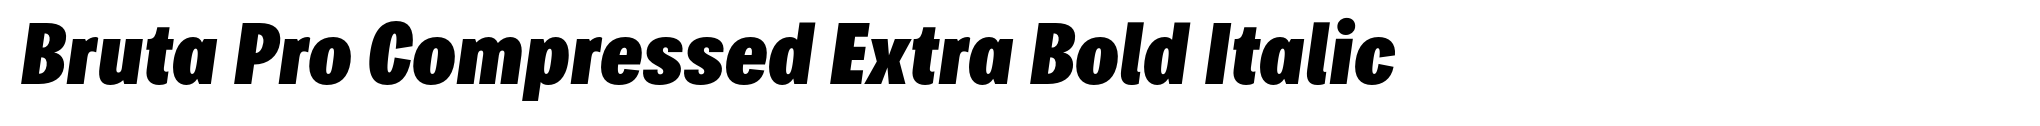 Bruta Pro Compressed Extra Bold Italic image